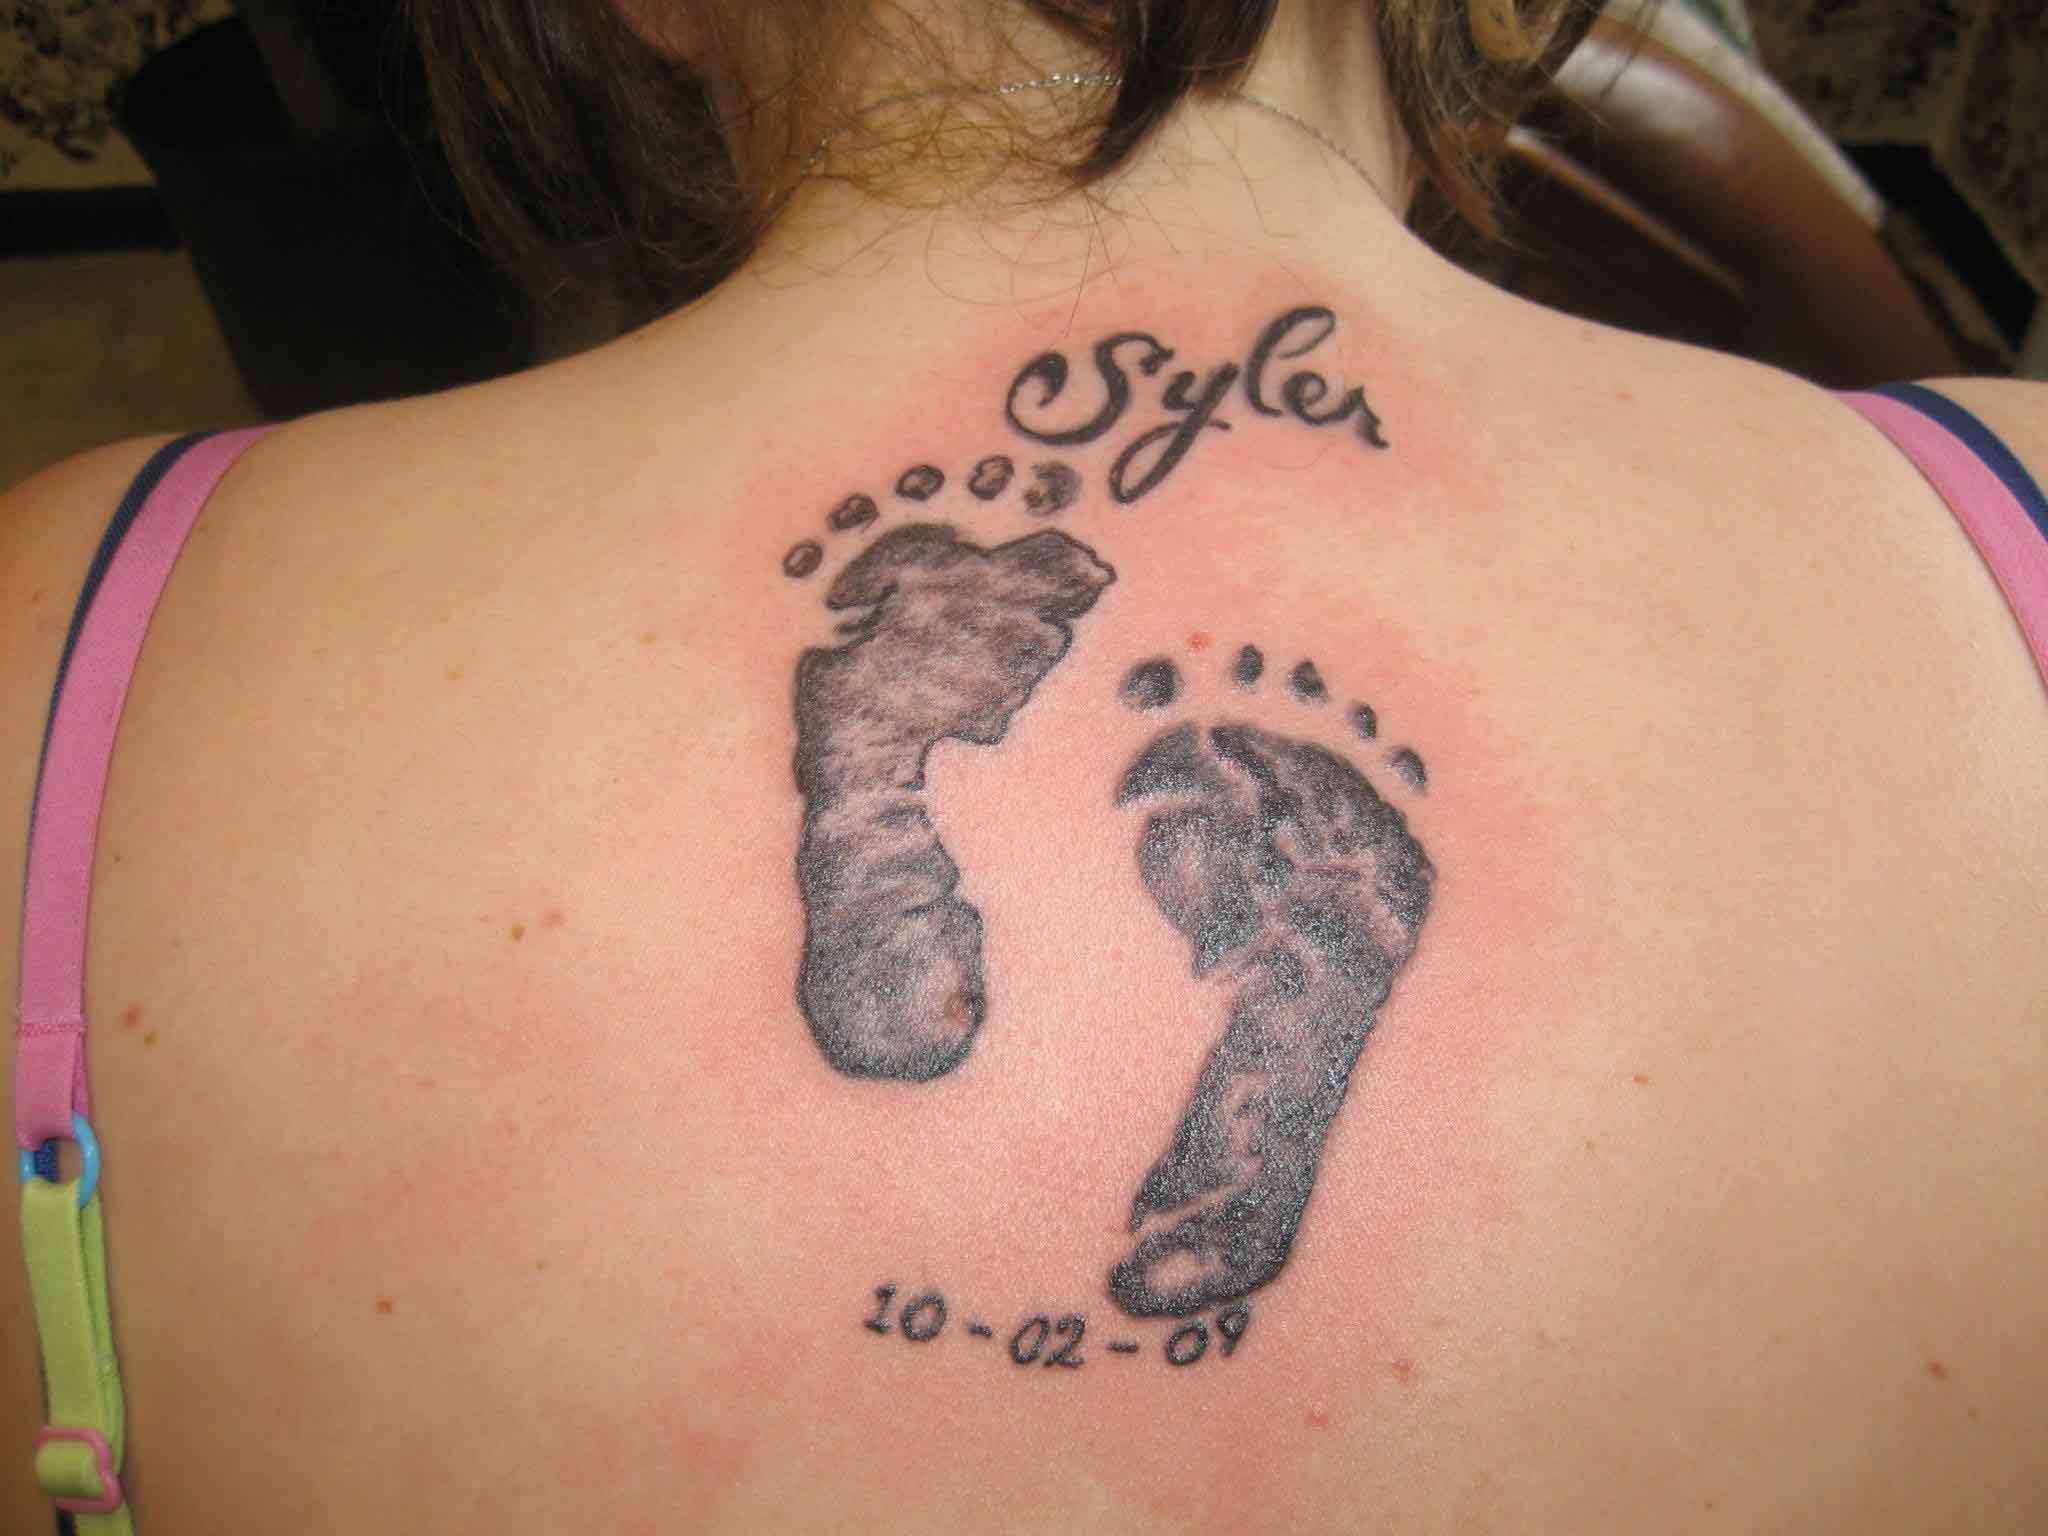 Syler - Memorial Feet Print Tattoo On Girl Upper Back